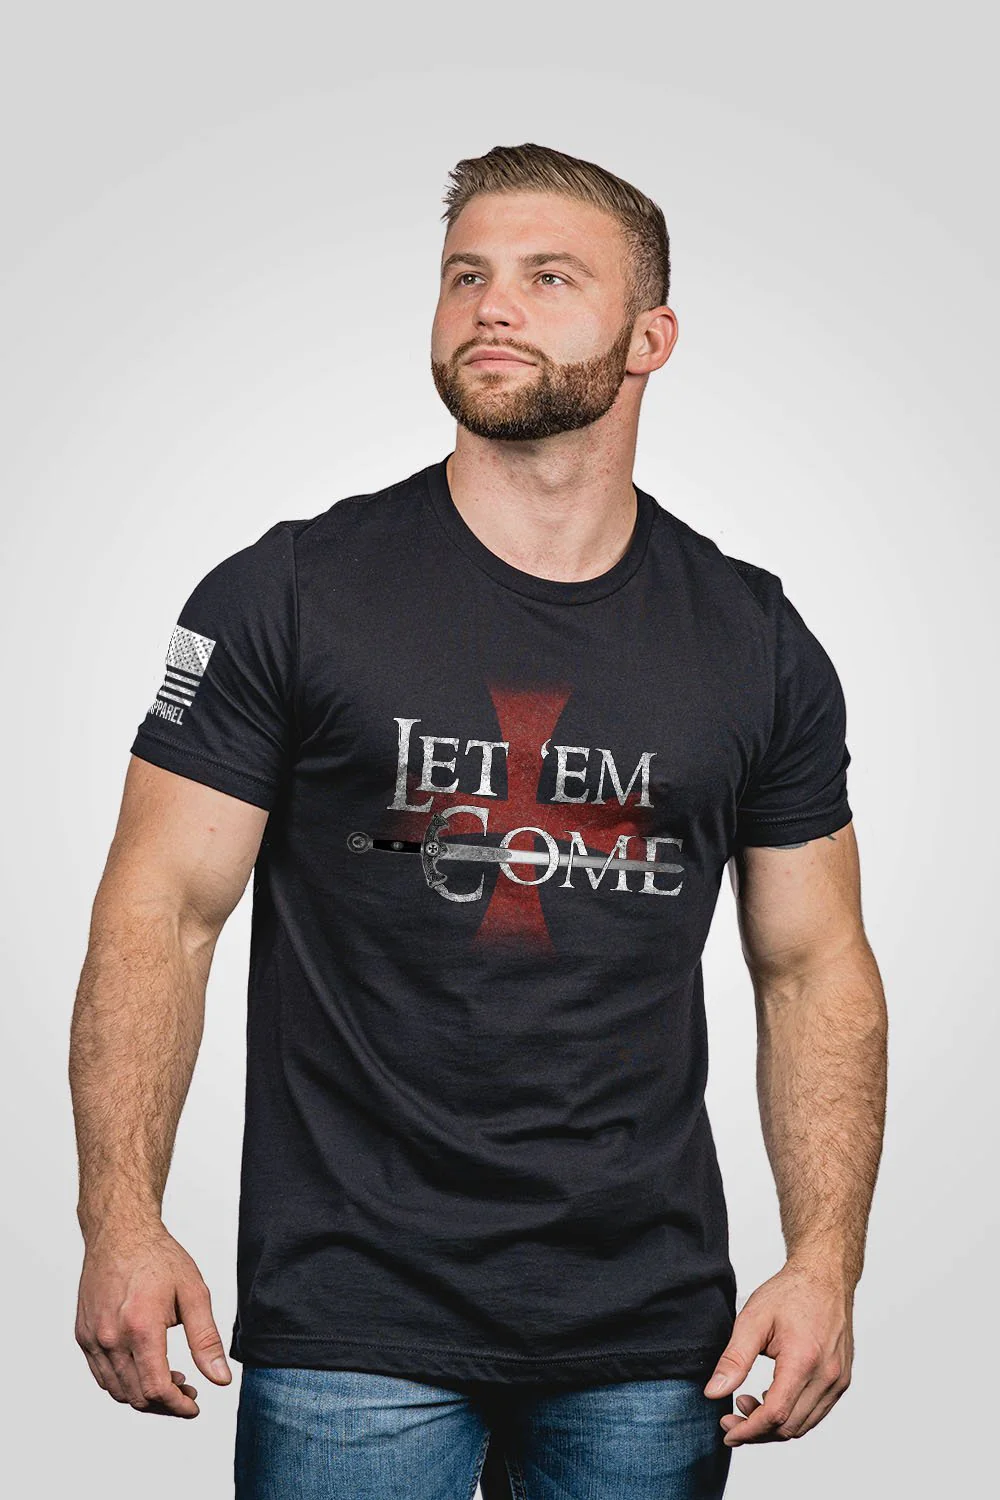 Nine Line Men's Mark Oz T-Shirt posted by ProdOrigin USA in Men's Apparel